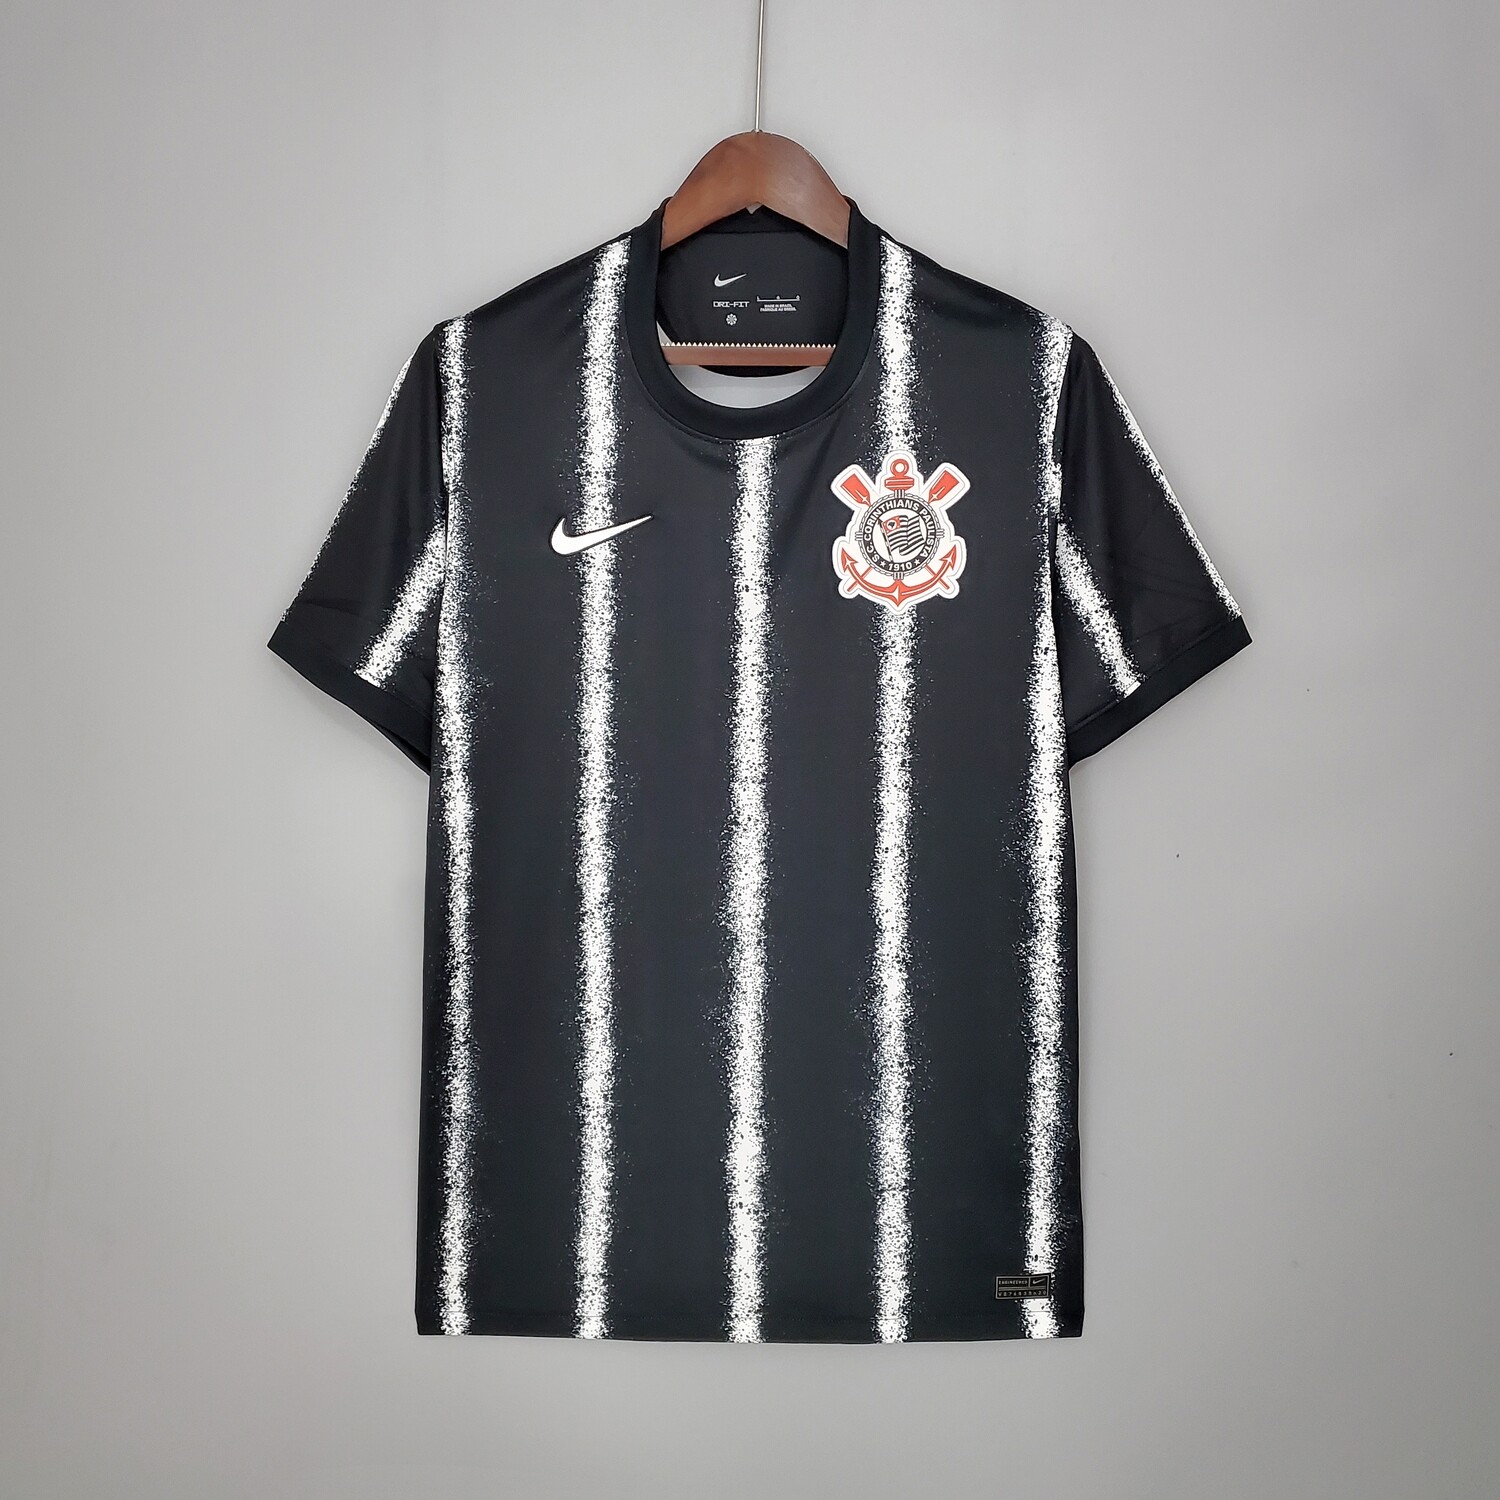 Camisa Corinthians II 21/22 Torcedor Nike Masculina - Preto+Branco